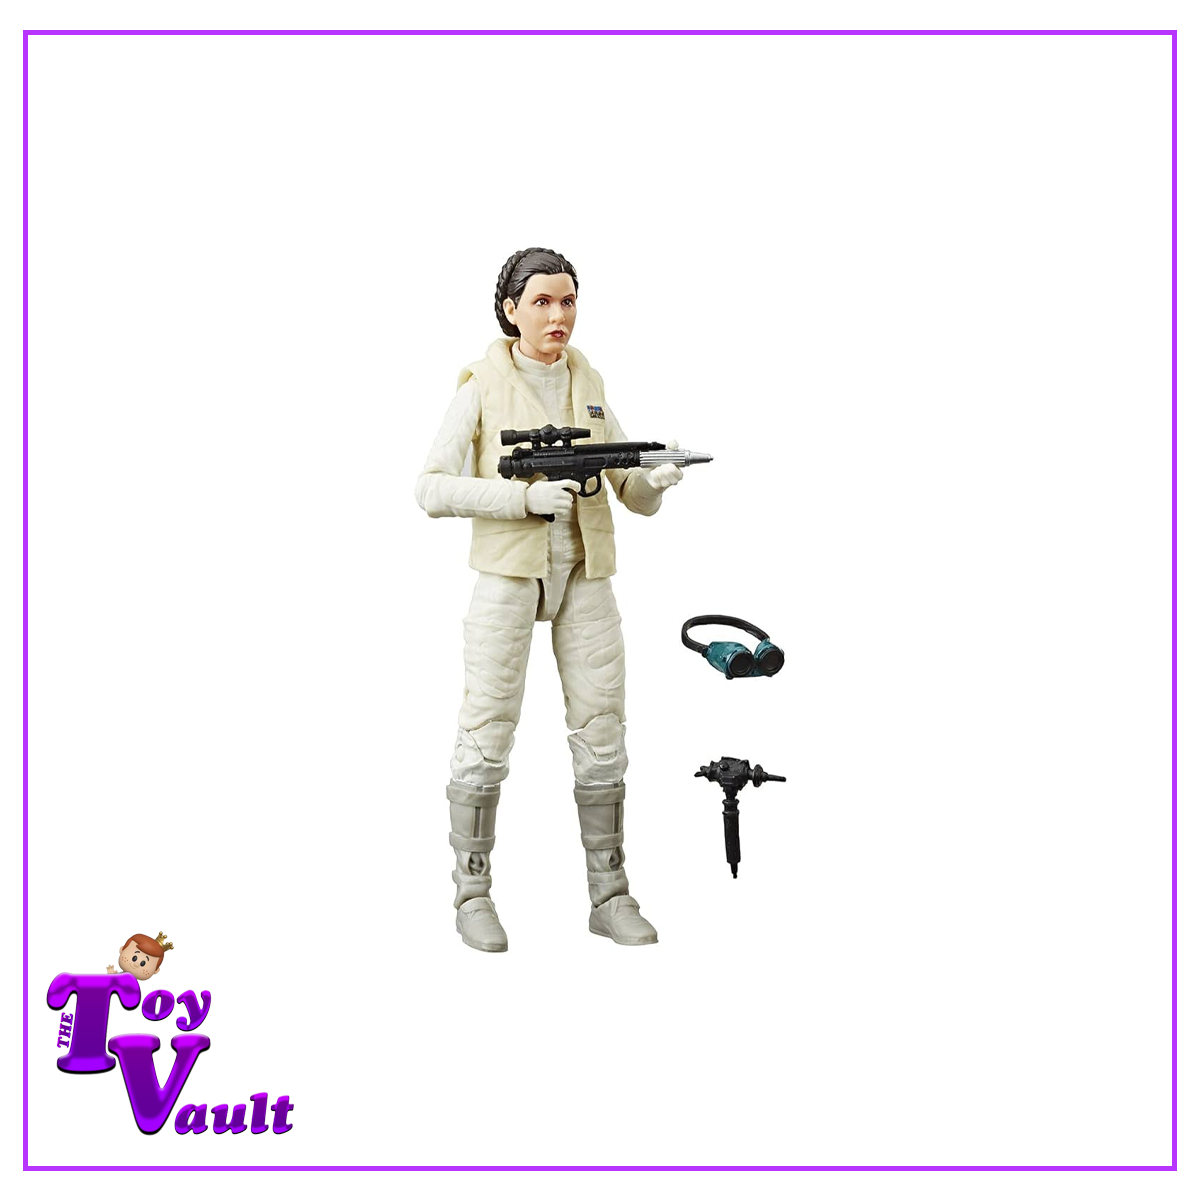 Hasbro Star Wars The Black Series - Princess Leia Organa (Hoth) 6 inch Action Figure